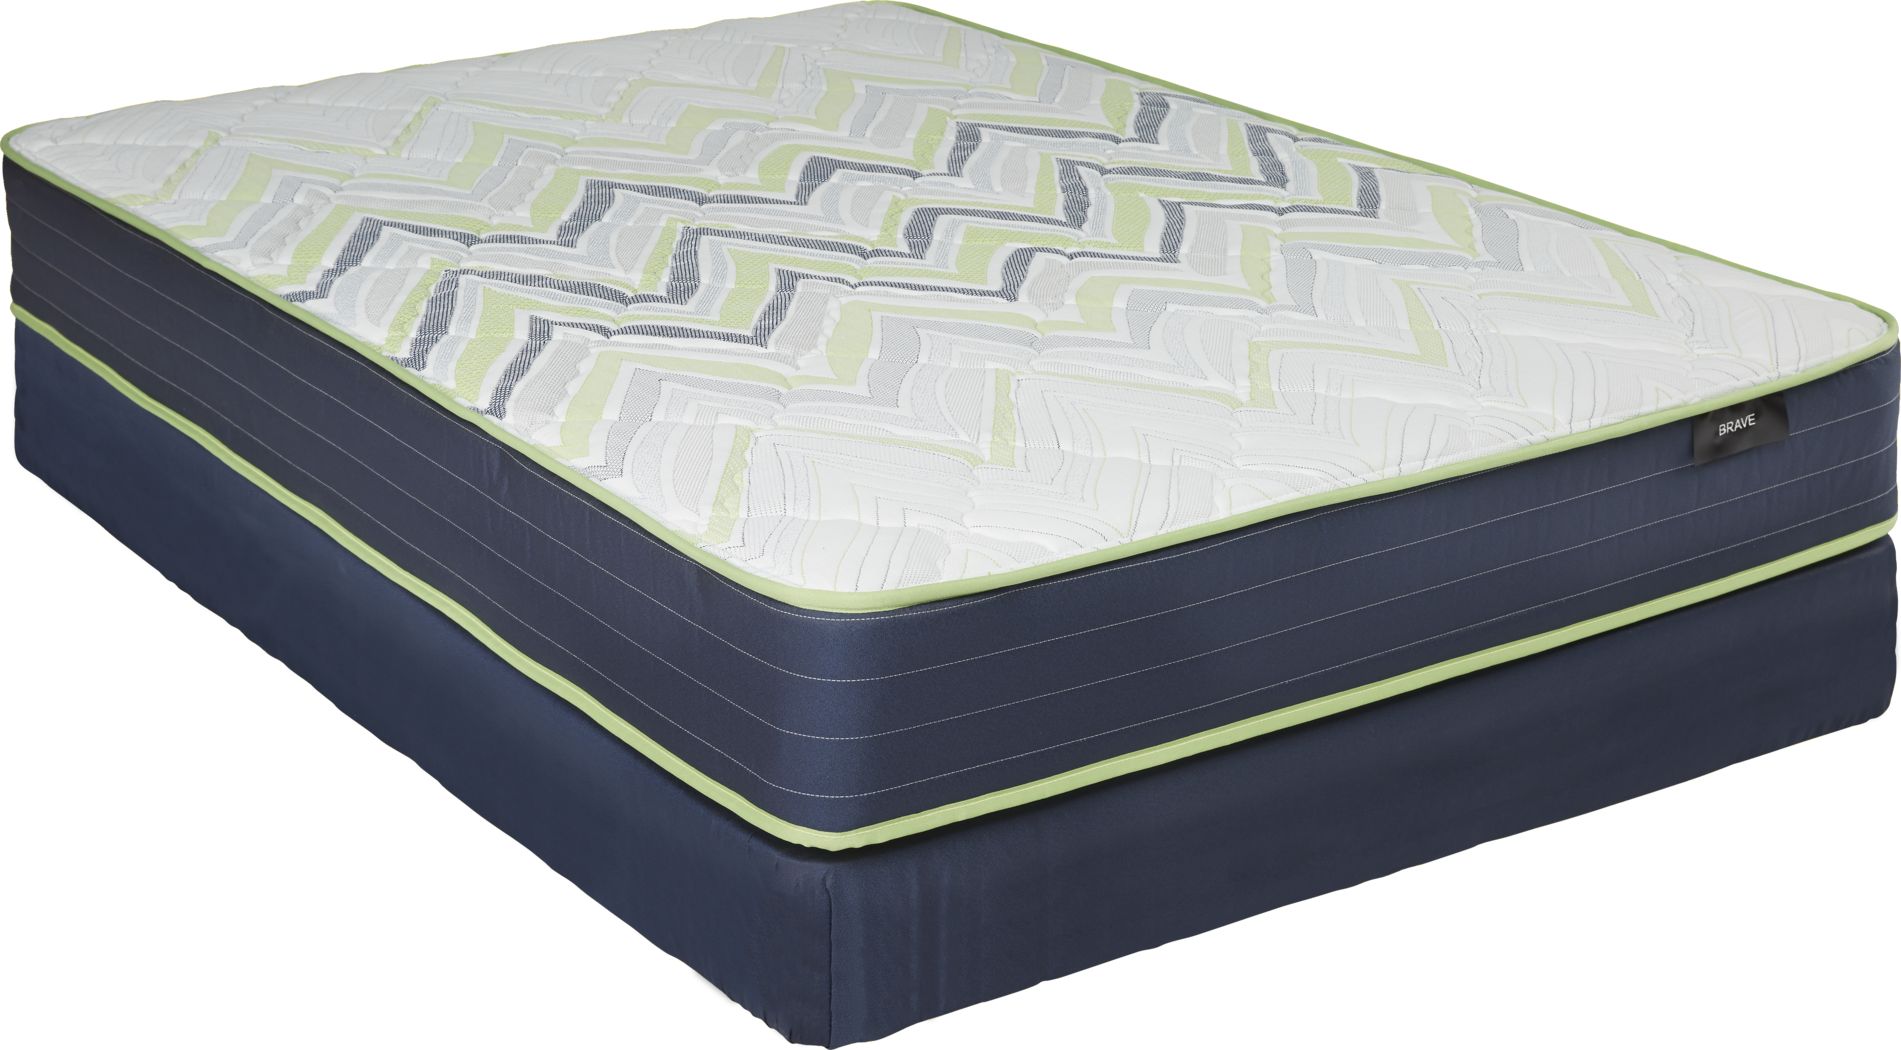 kingsdown sleeping beauty mattress price